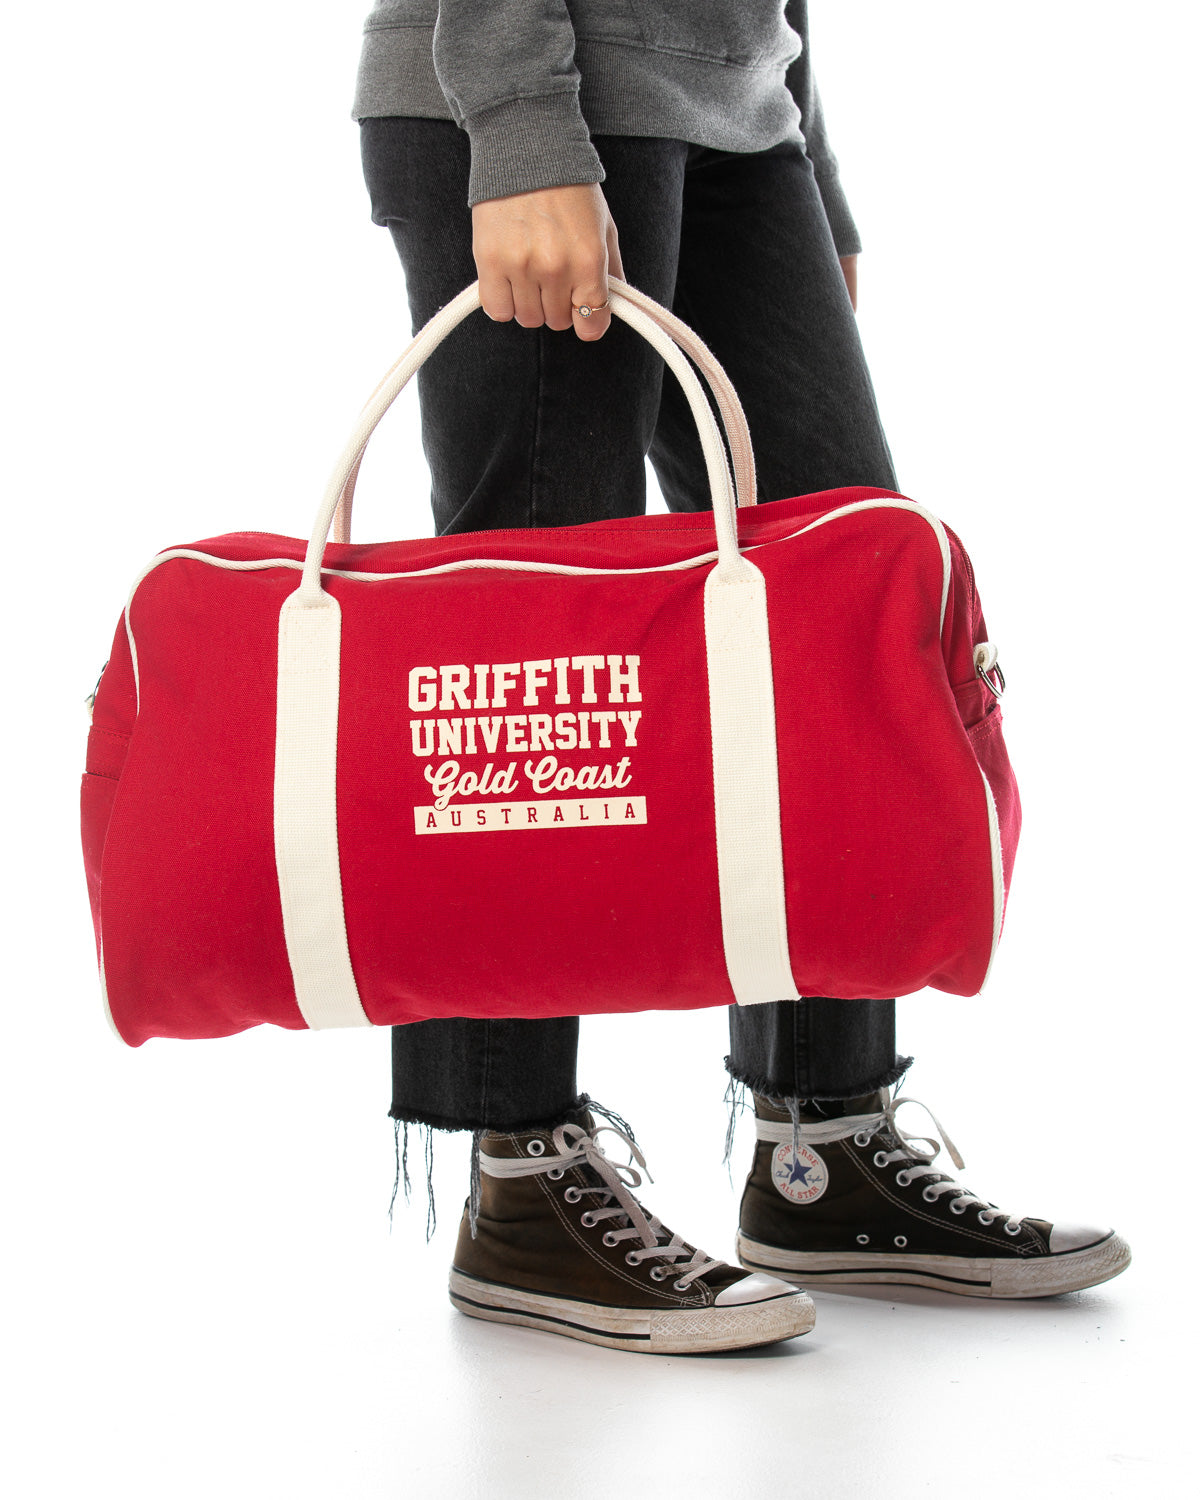 Griffith duffle bag